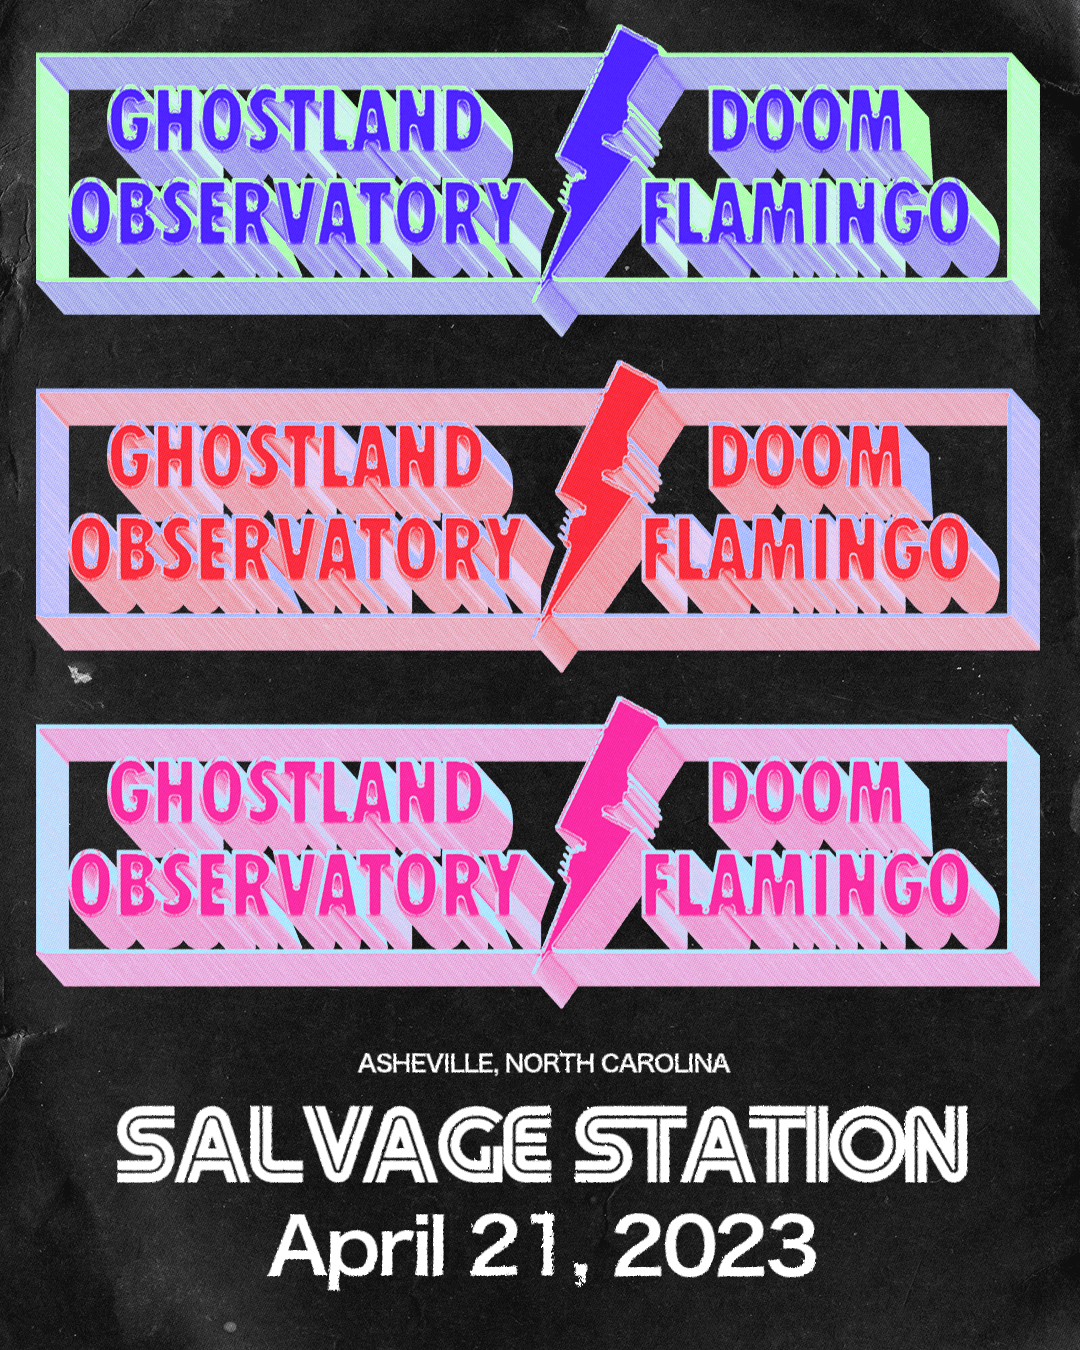 Doom Flamingo and Ghostland Observatory